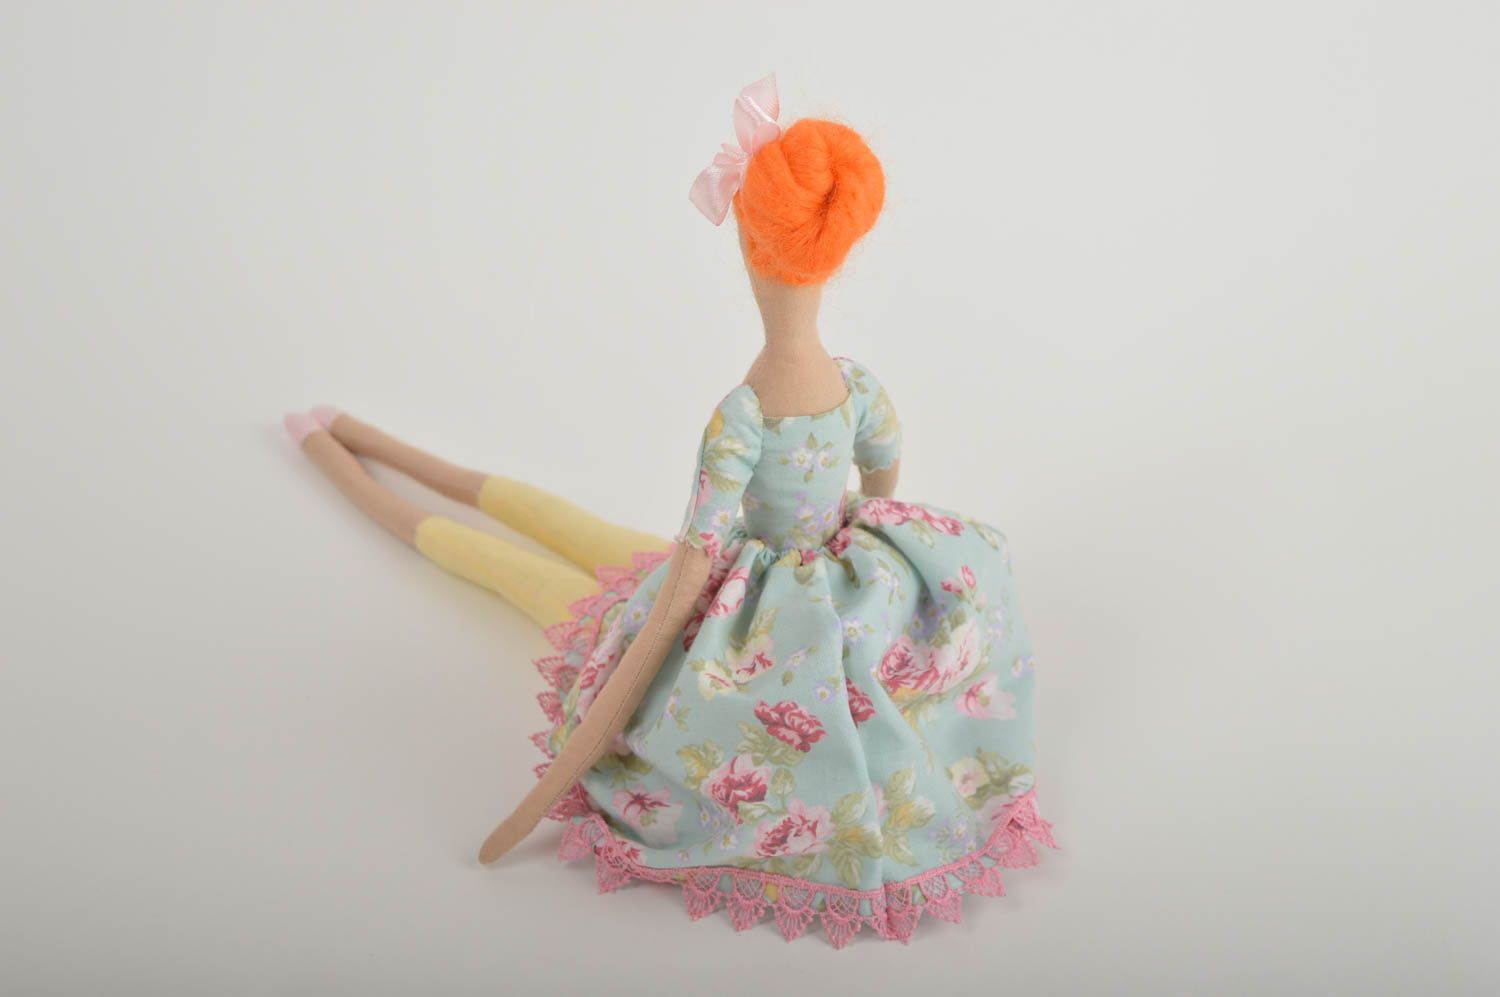 Handmade doll designer toy for girls unusual gift ideas nursery decor photo 3